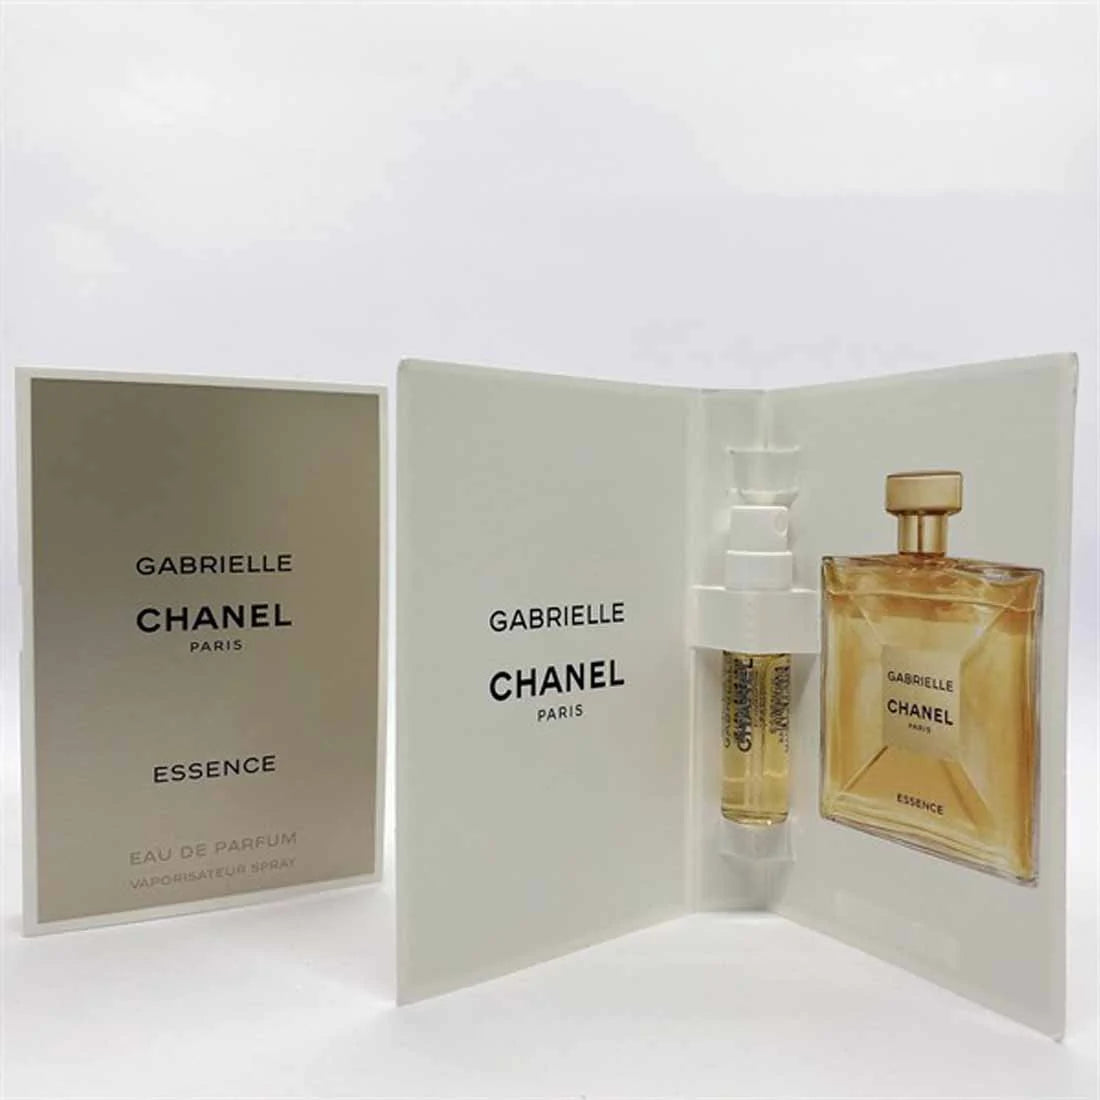 Chanel Gabrielle Essence edp 35ml